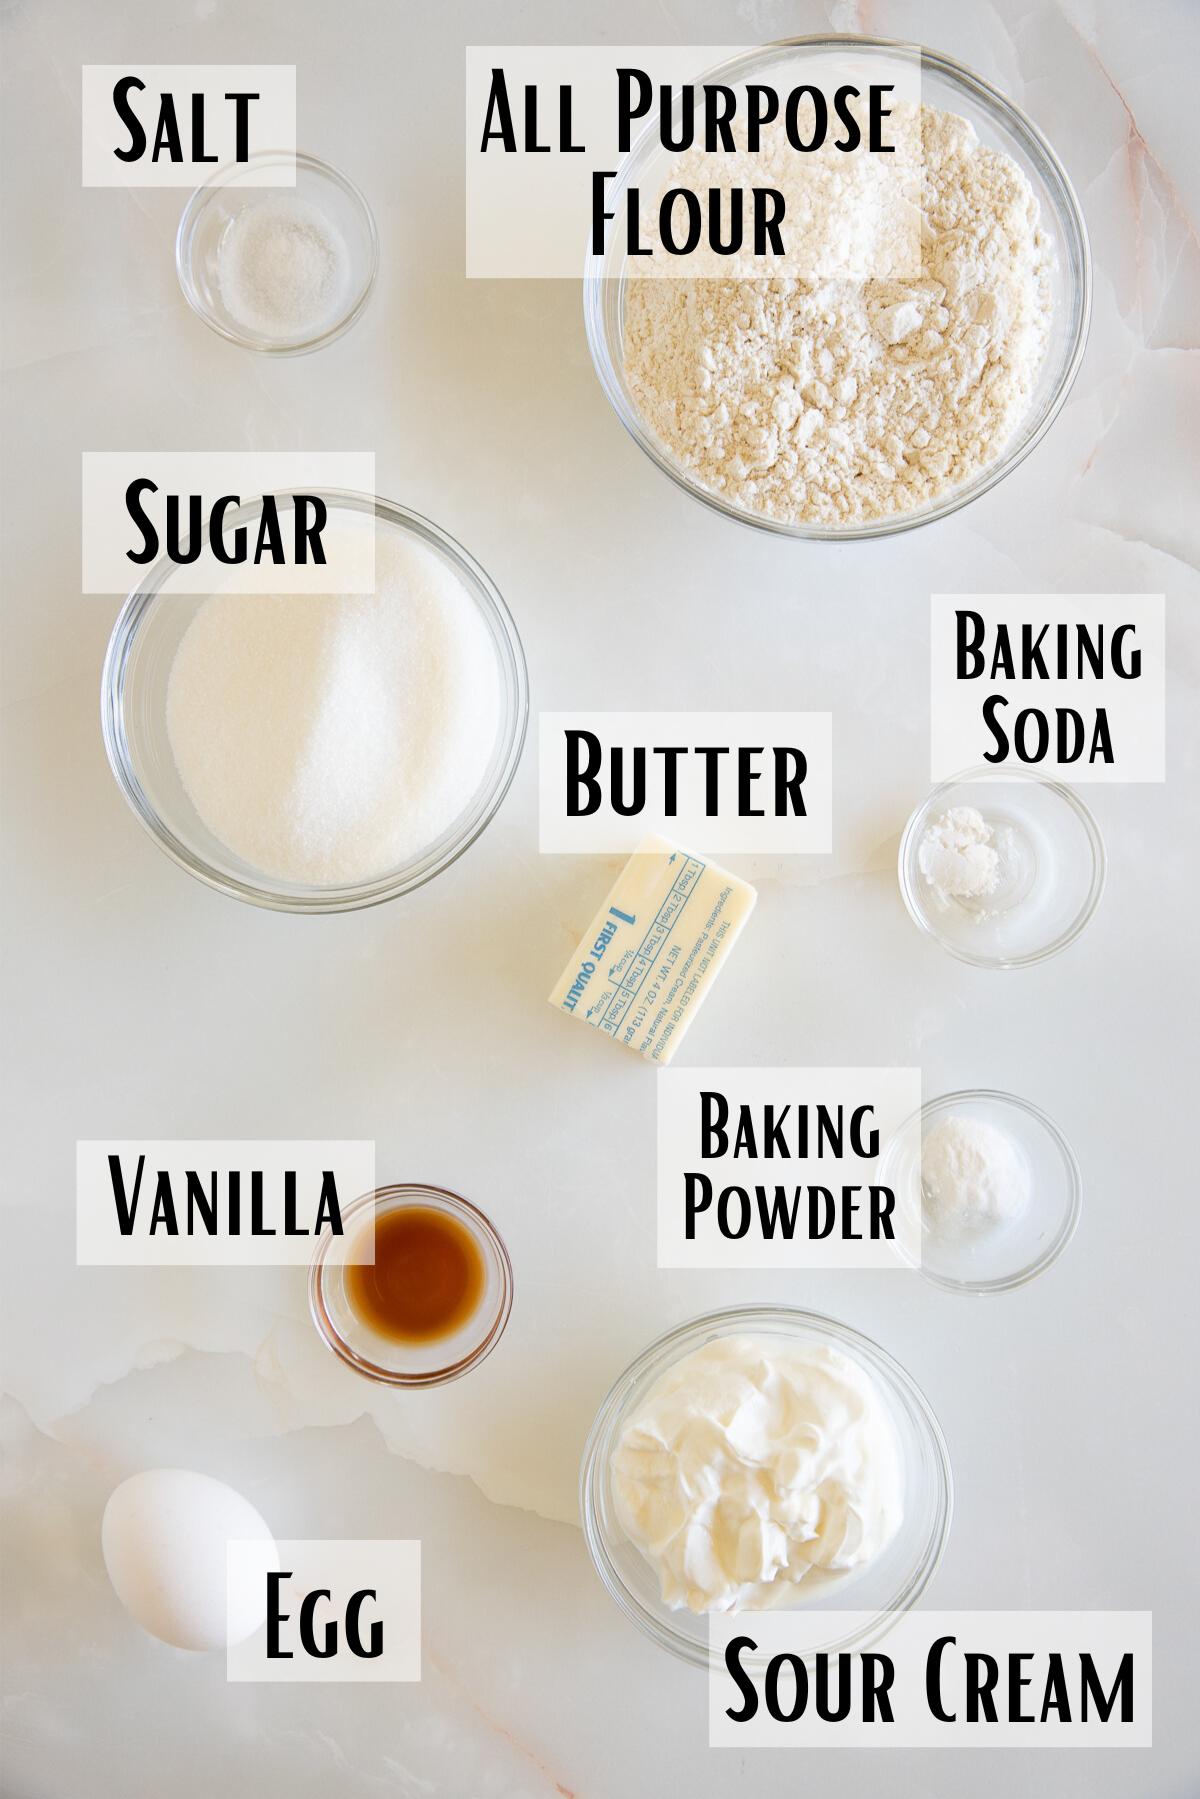 sour cream cookie ingredients of flour, baking powder, baking soda, salt, butter, sugar, vanilla, sour cream and egg.